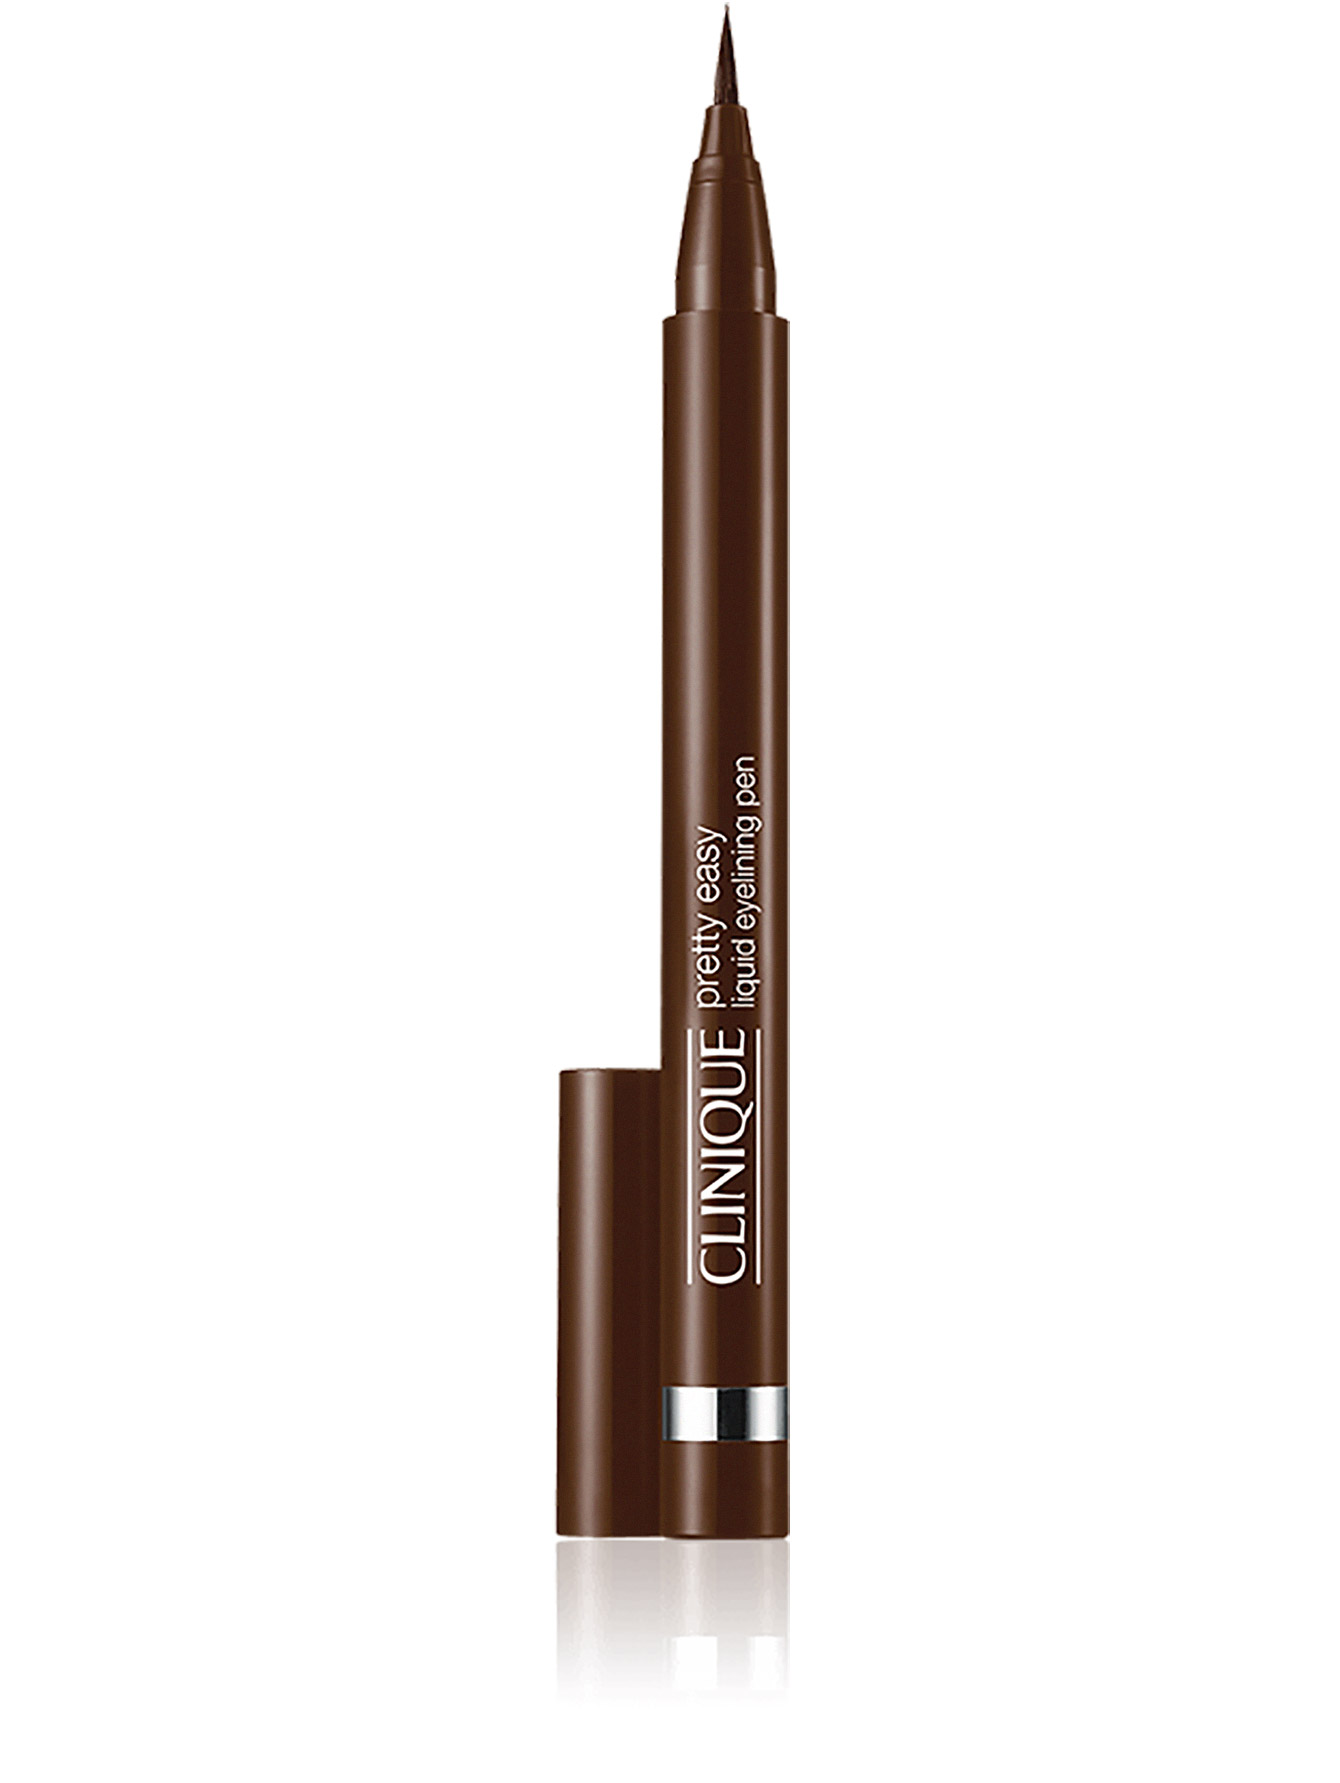  Жидкая подводка для век - Brown, Pretty Easy Pen, 2ml - Общий вид